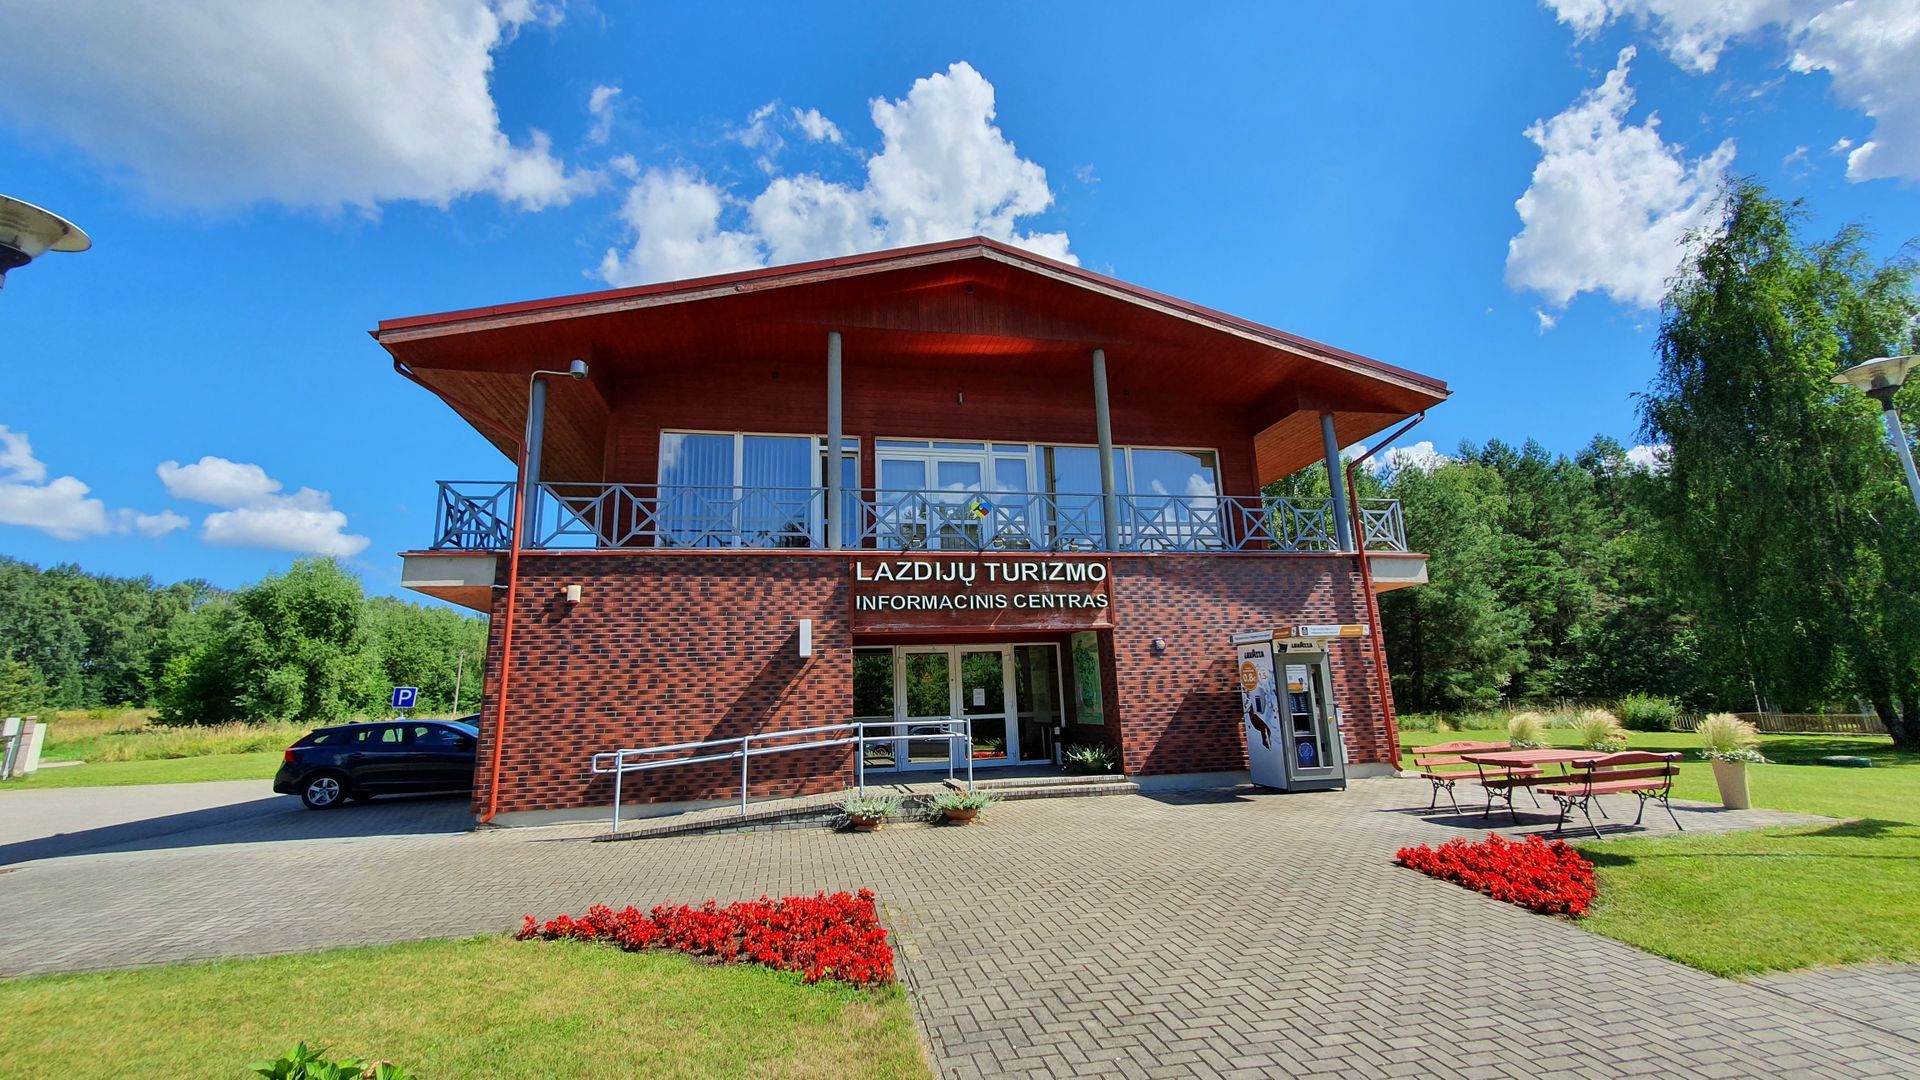 Lazdijai Tourism Information Center